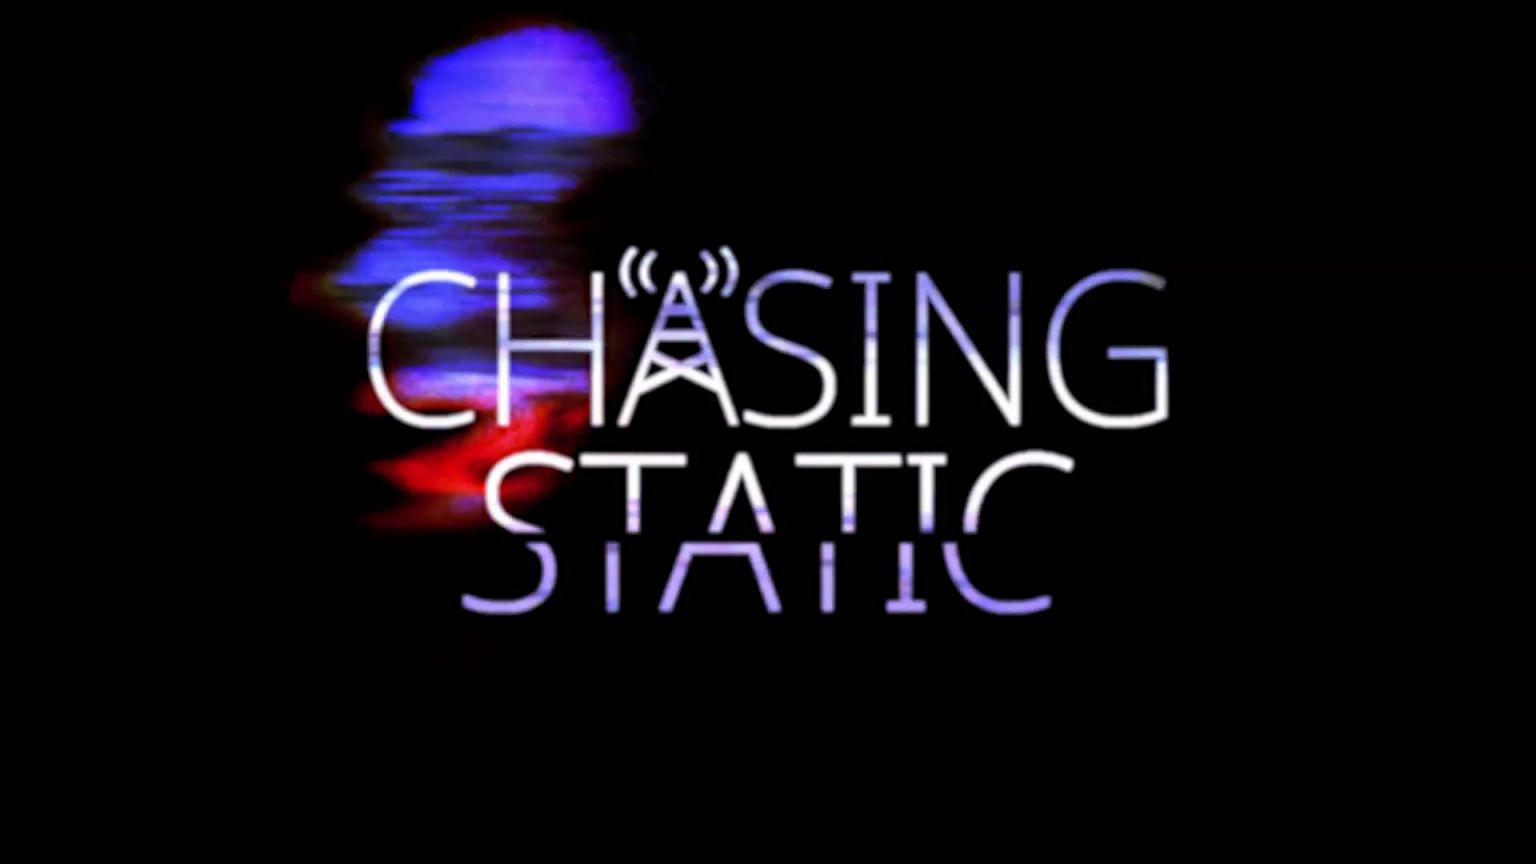 chasing static